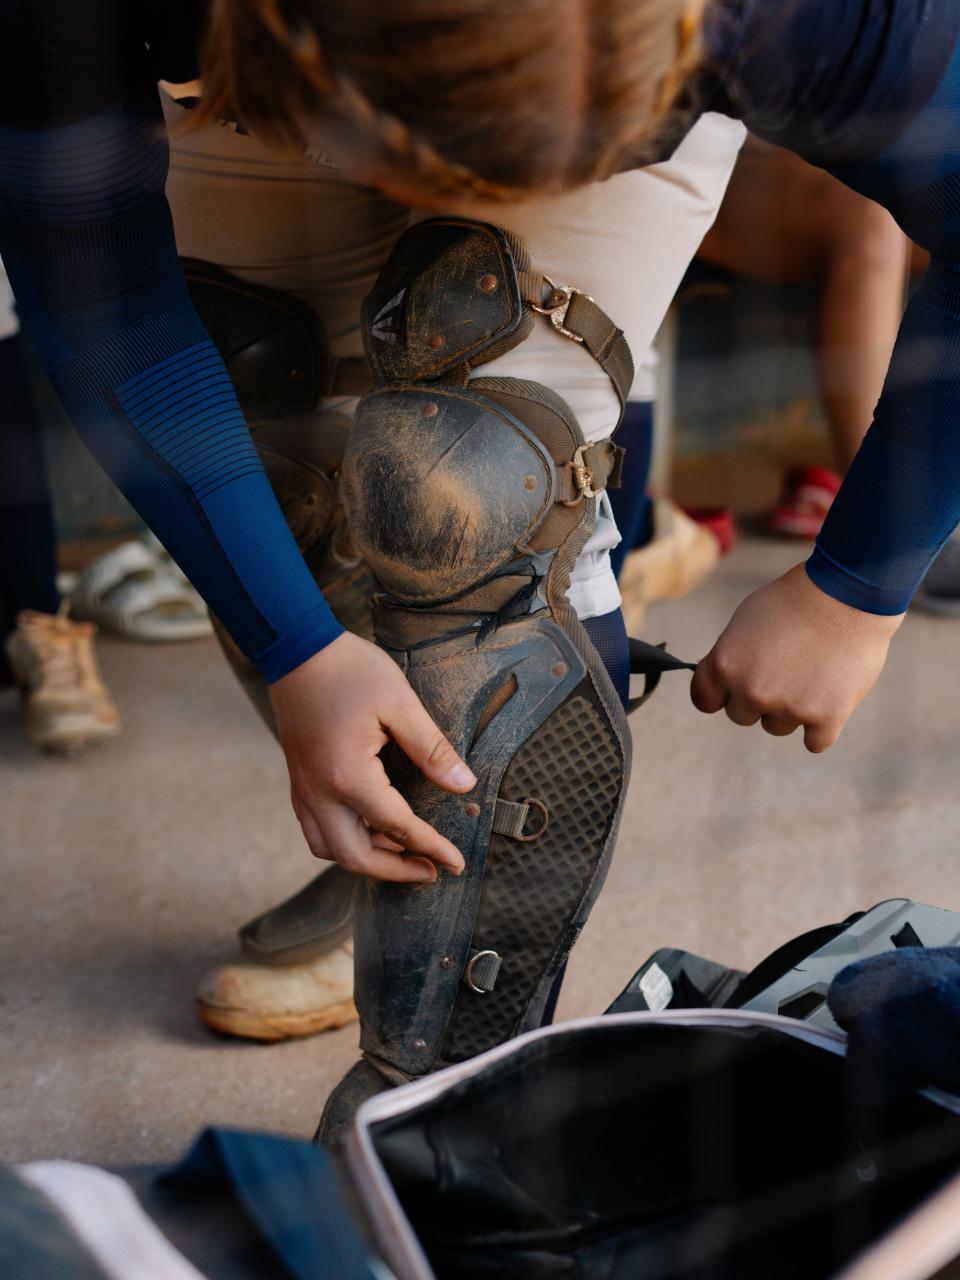 Hutzler dons protective gear during softball practice. (Martina Tuaty for The Washington Post)